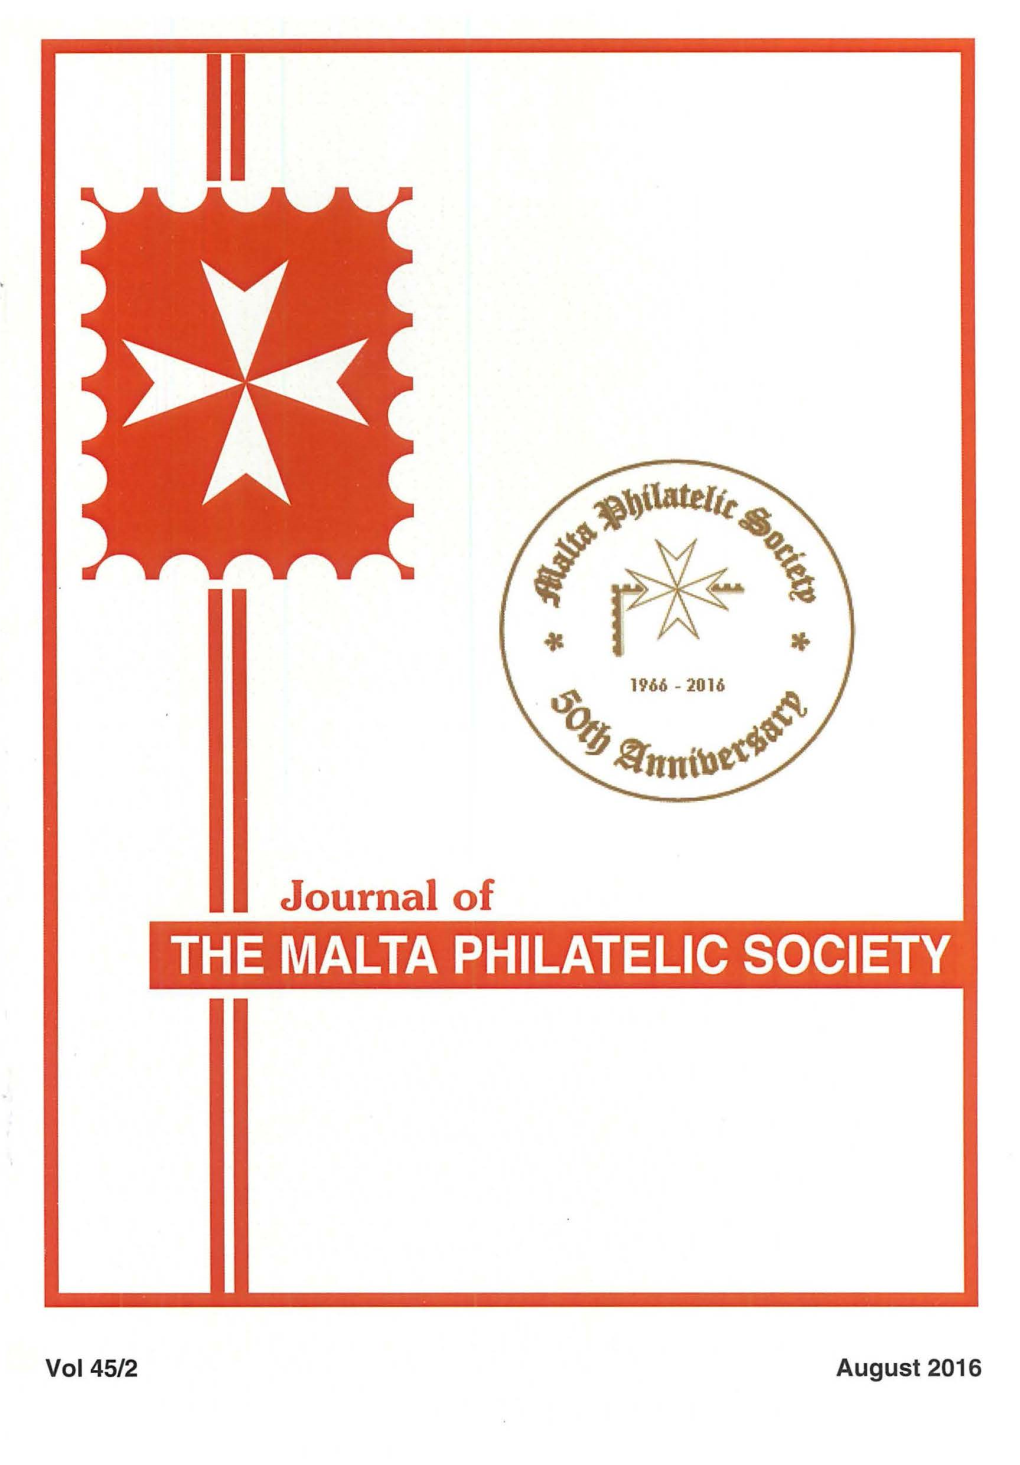 The Malta Philatelic Society